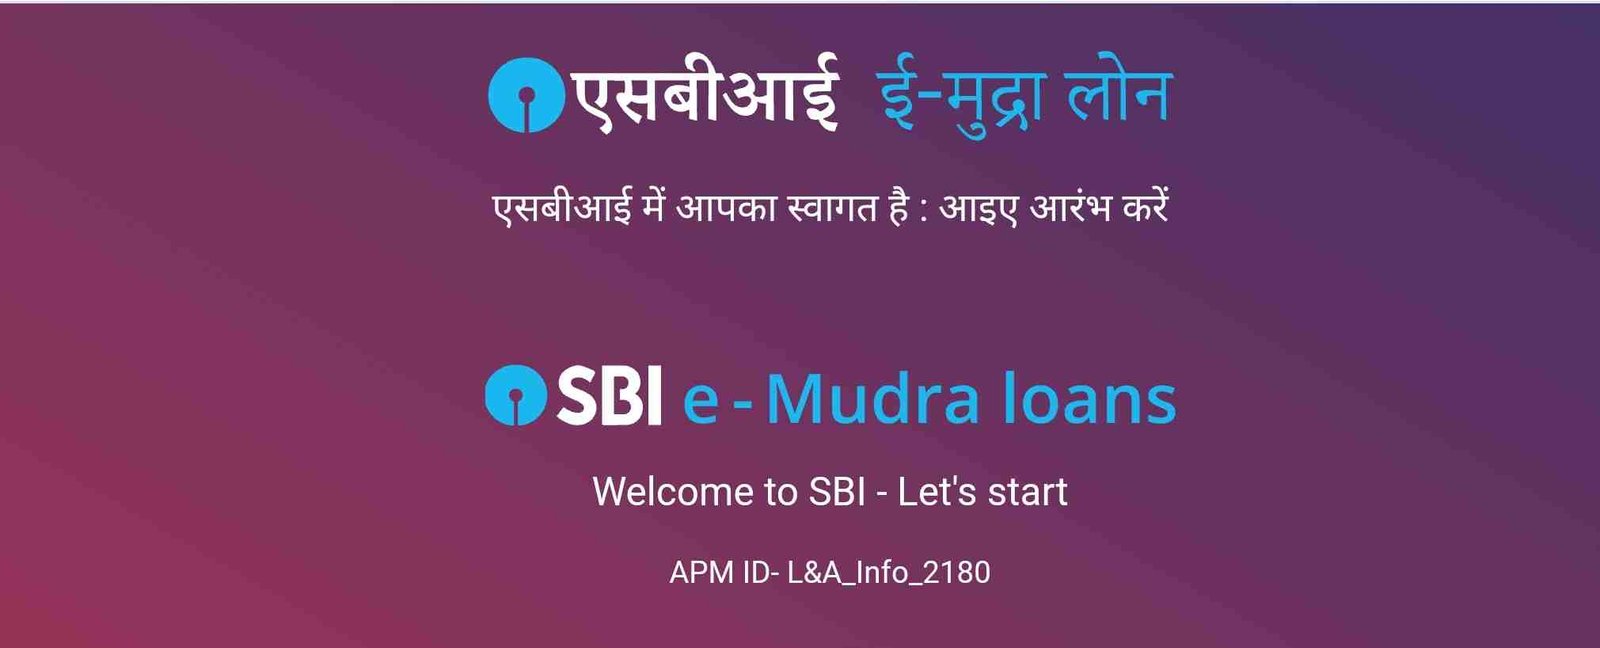 SBI Sishu Mudra Loan